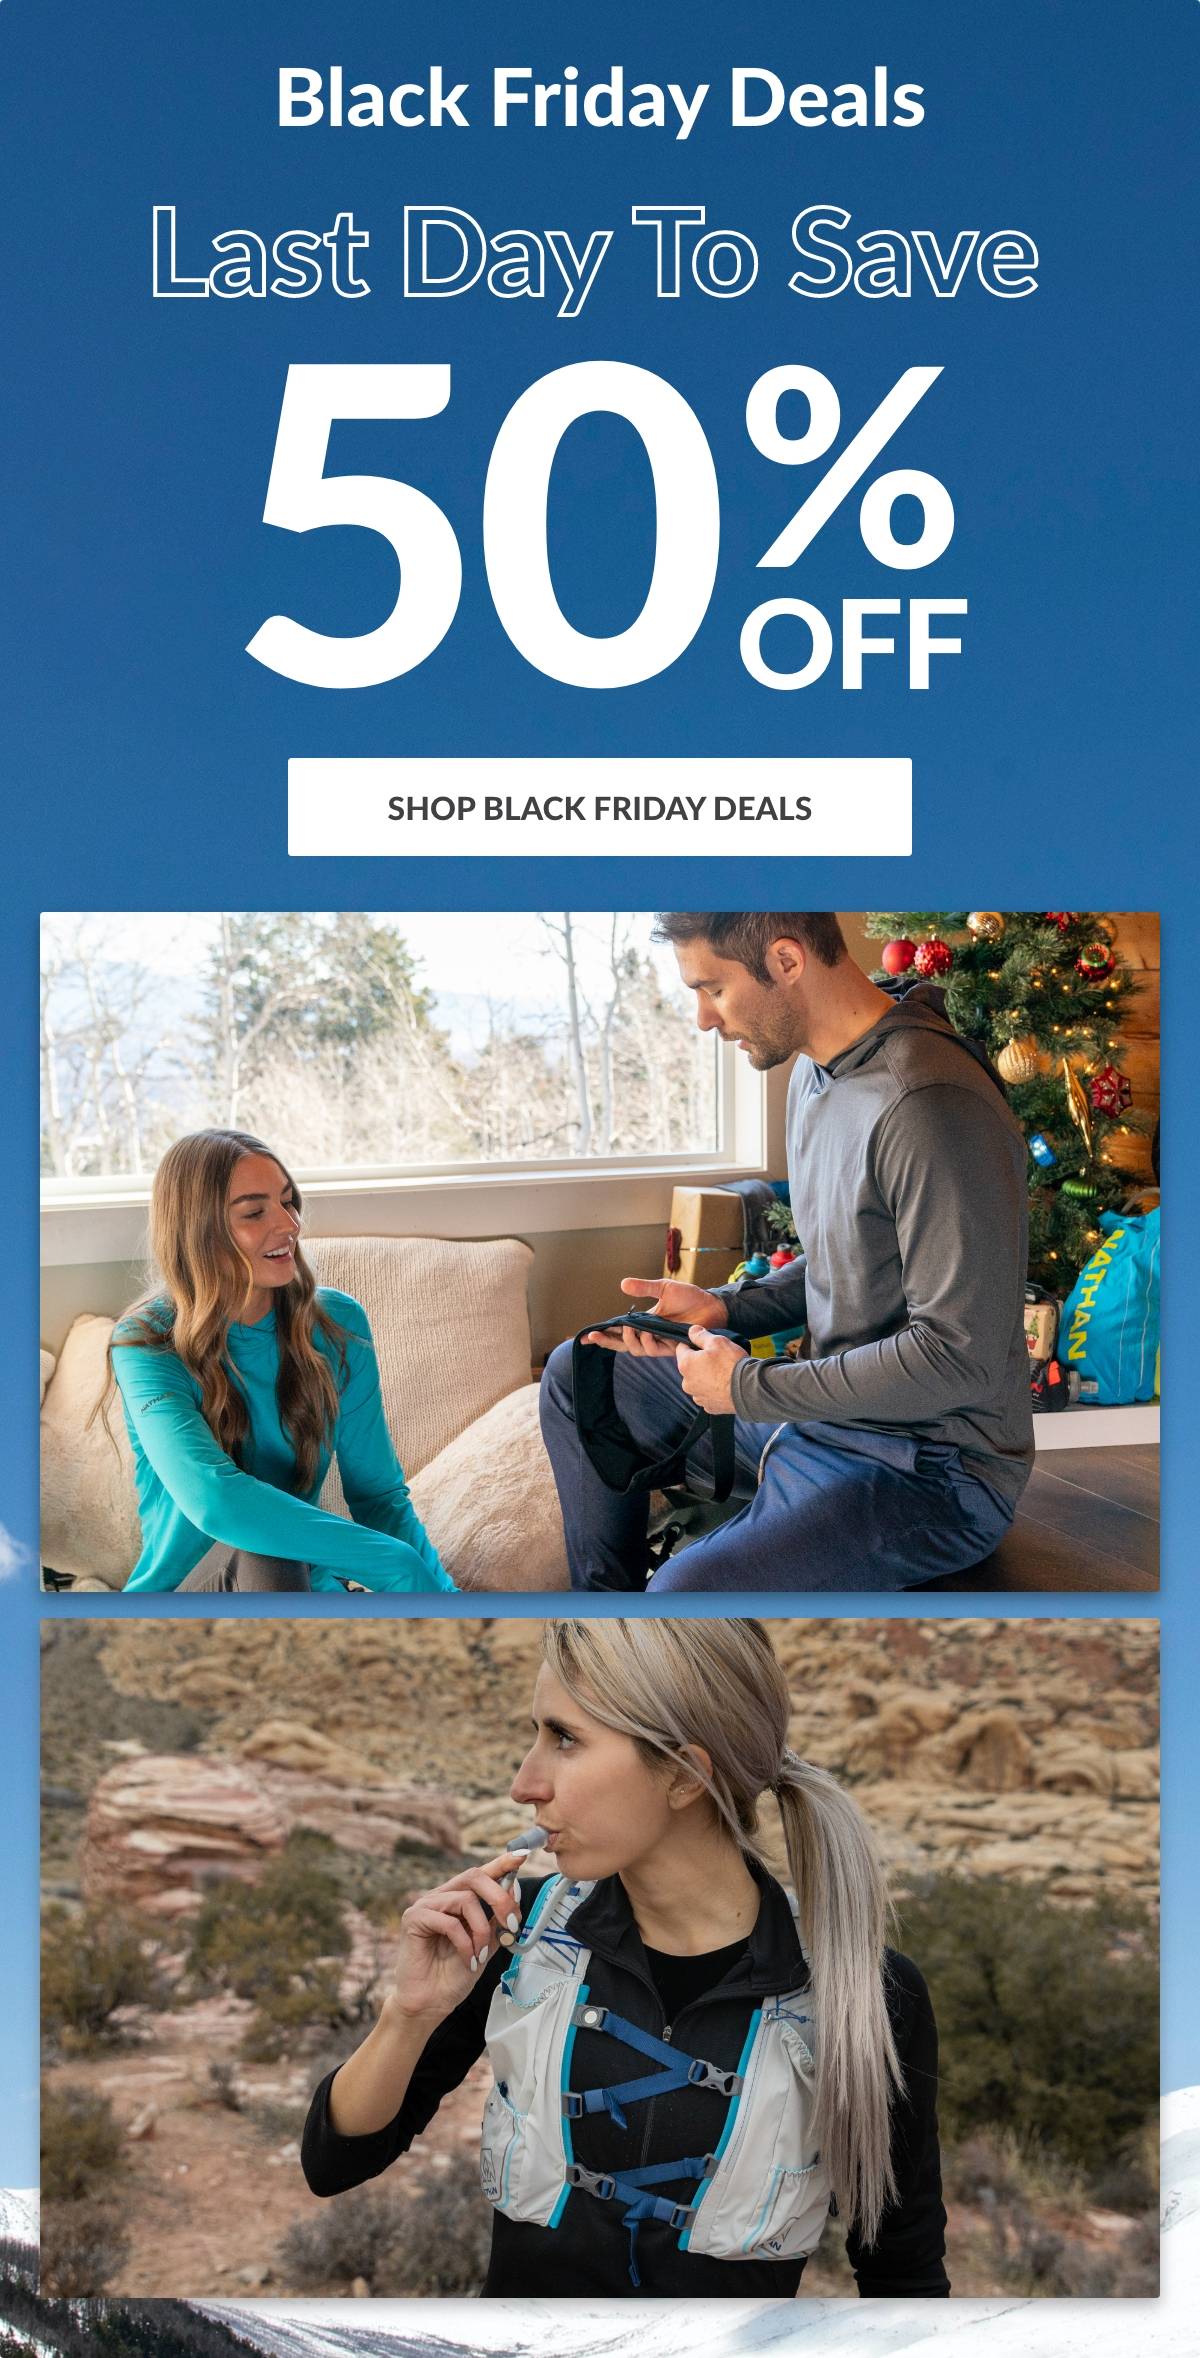 Black Friday Deals Last Day to Save 50% Off Shop Black Friday Deals